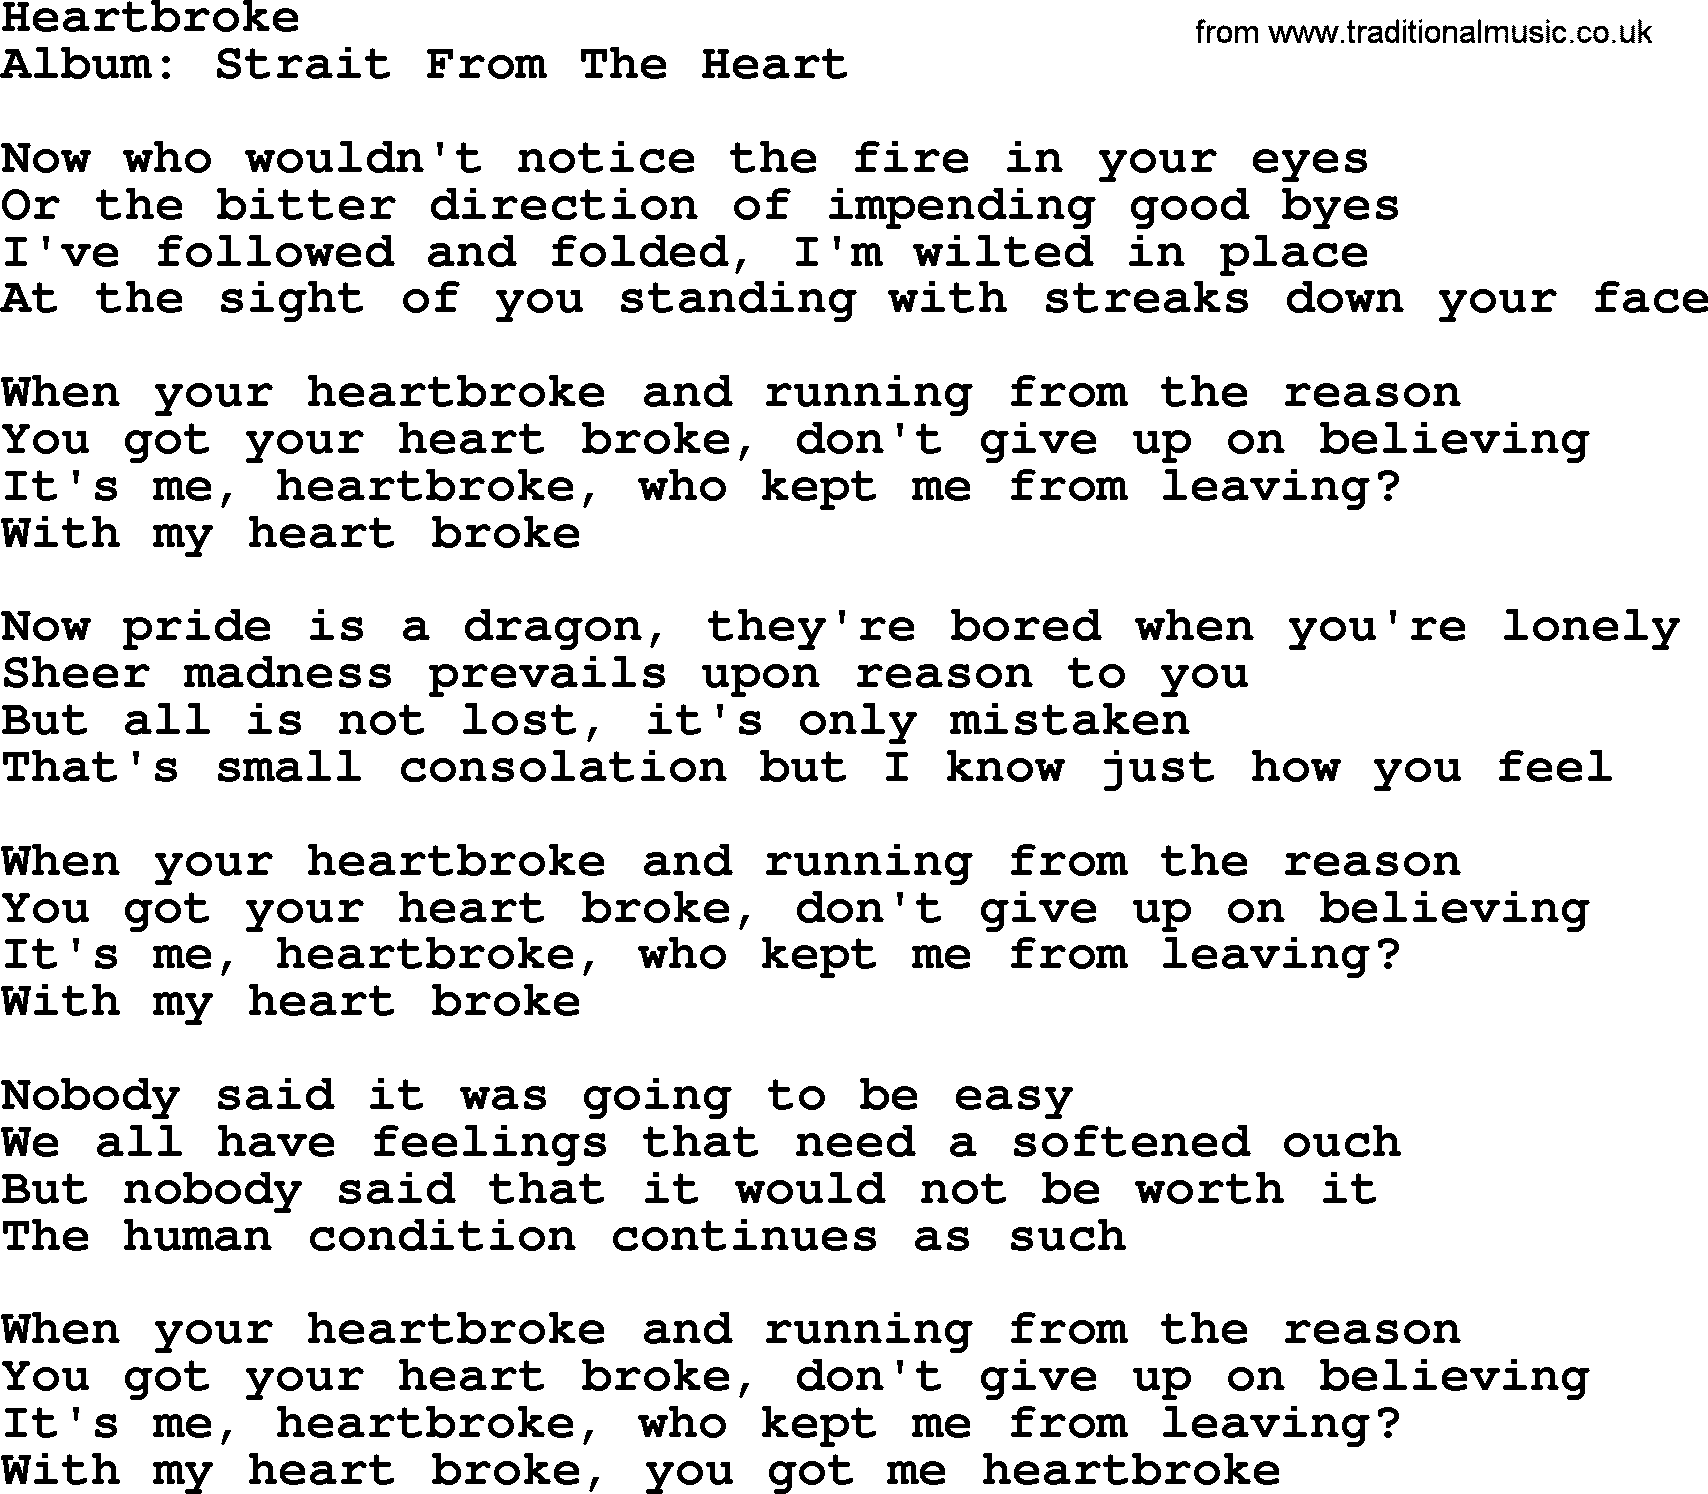 George Strait song: Heartbroke, lyrics